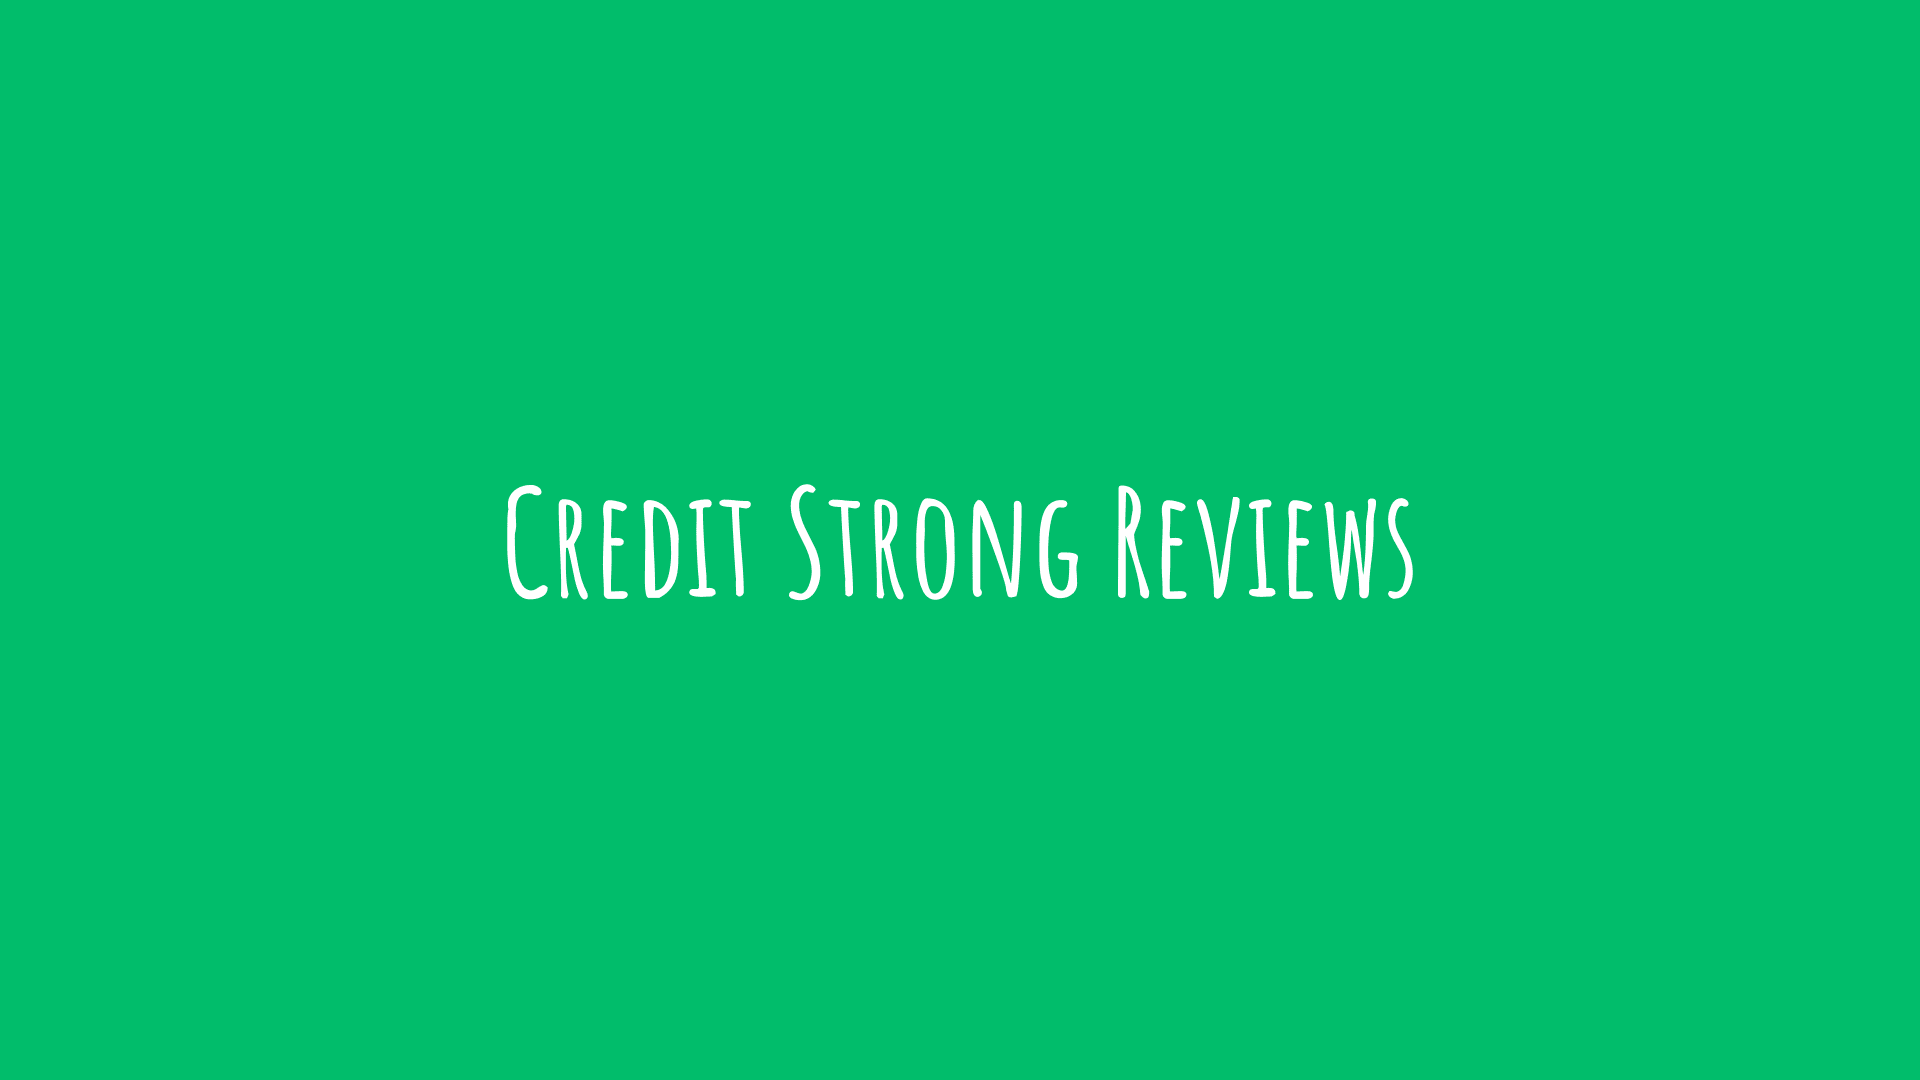 Credit Strong Reviews